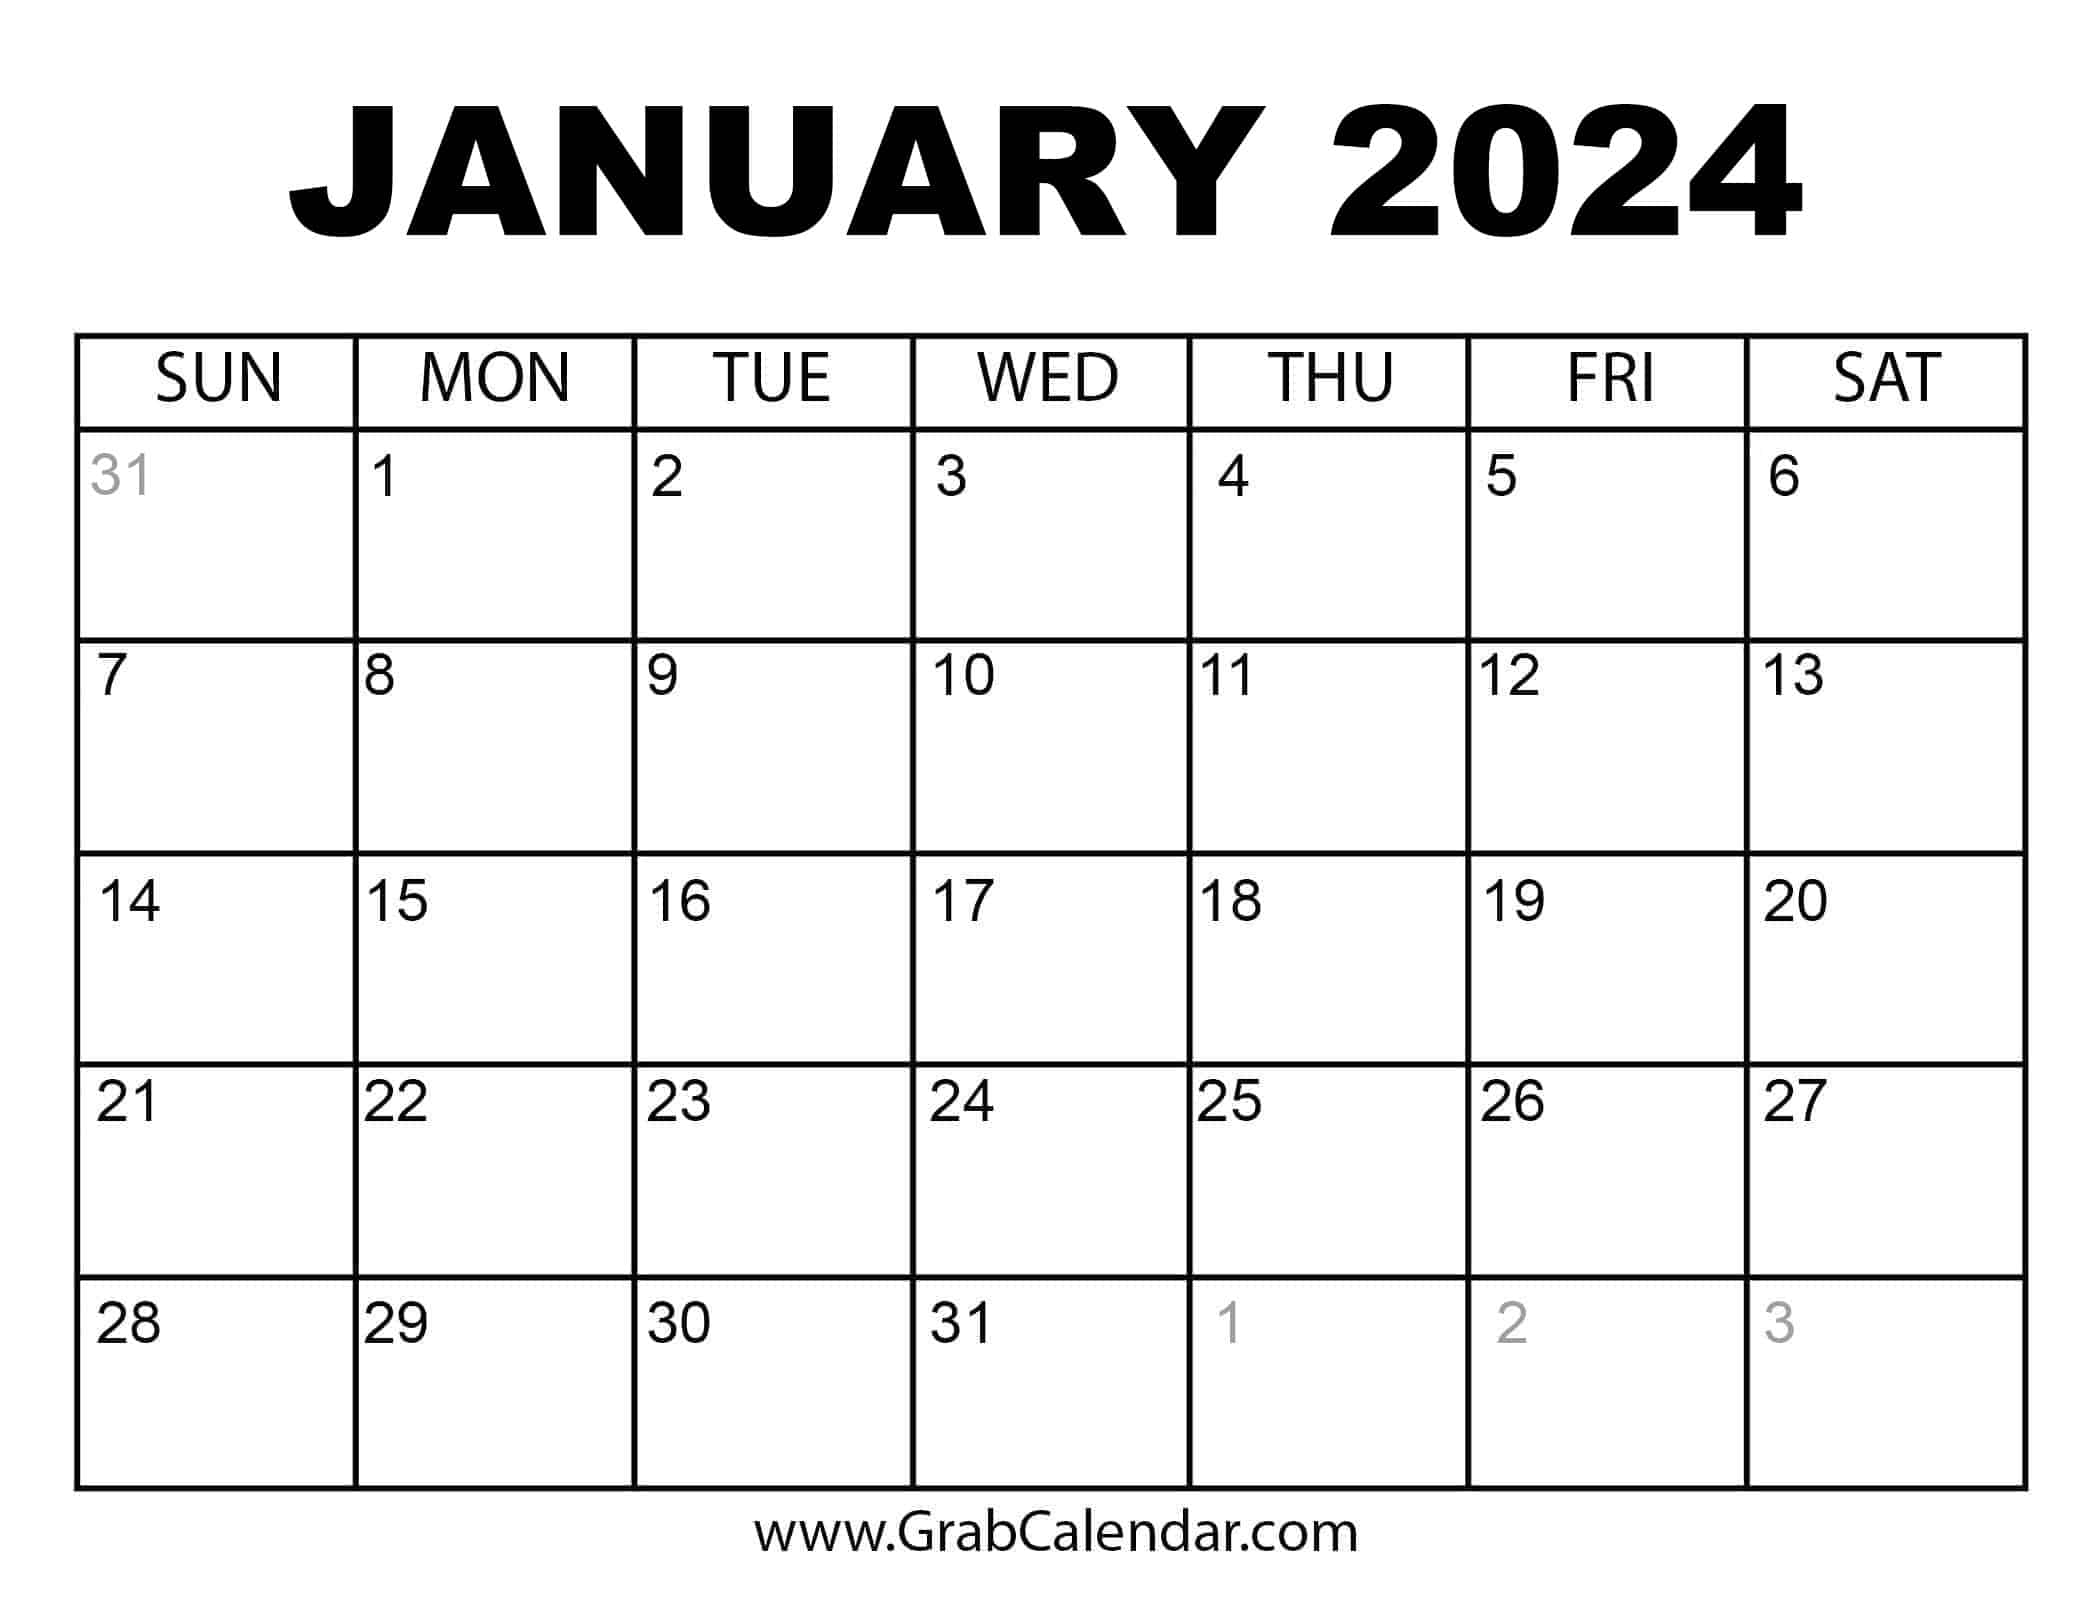 Show Me A Calendar Of January 2024 Barbe Carlita